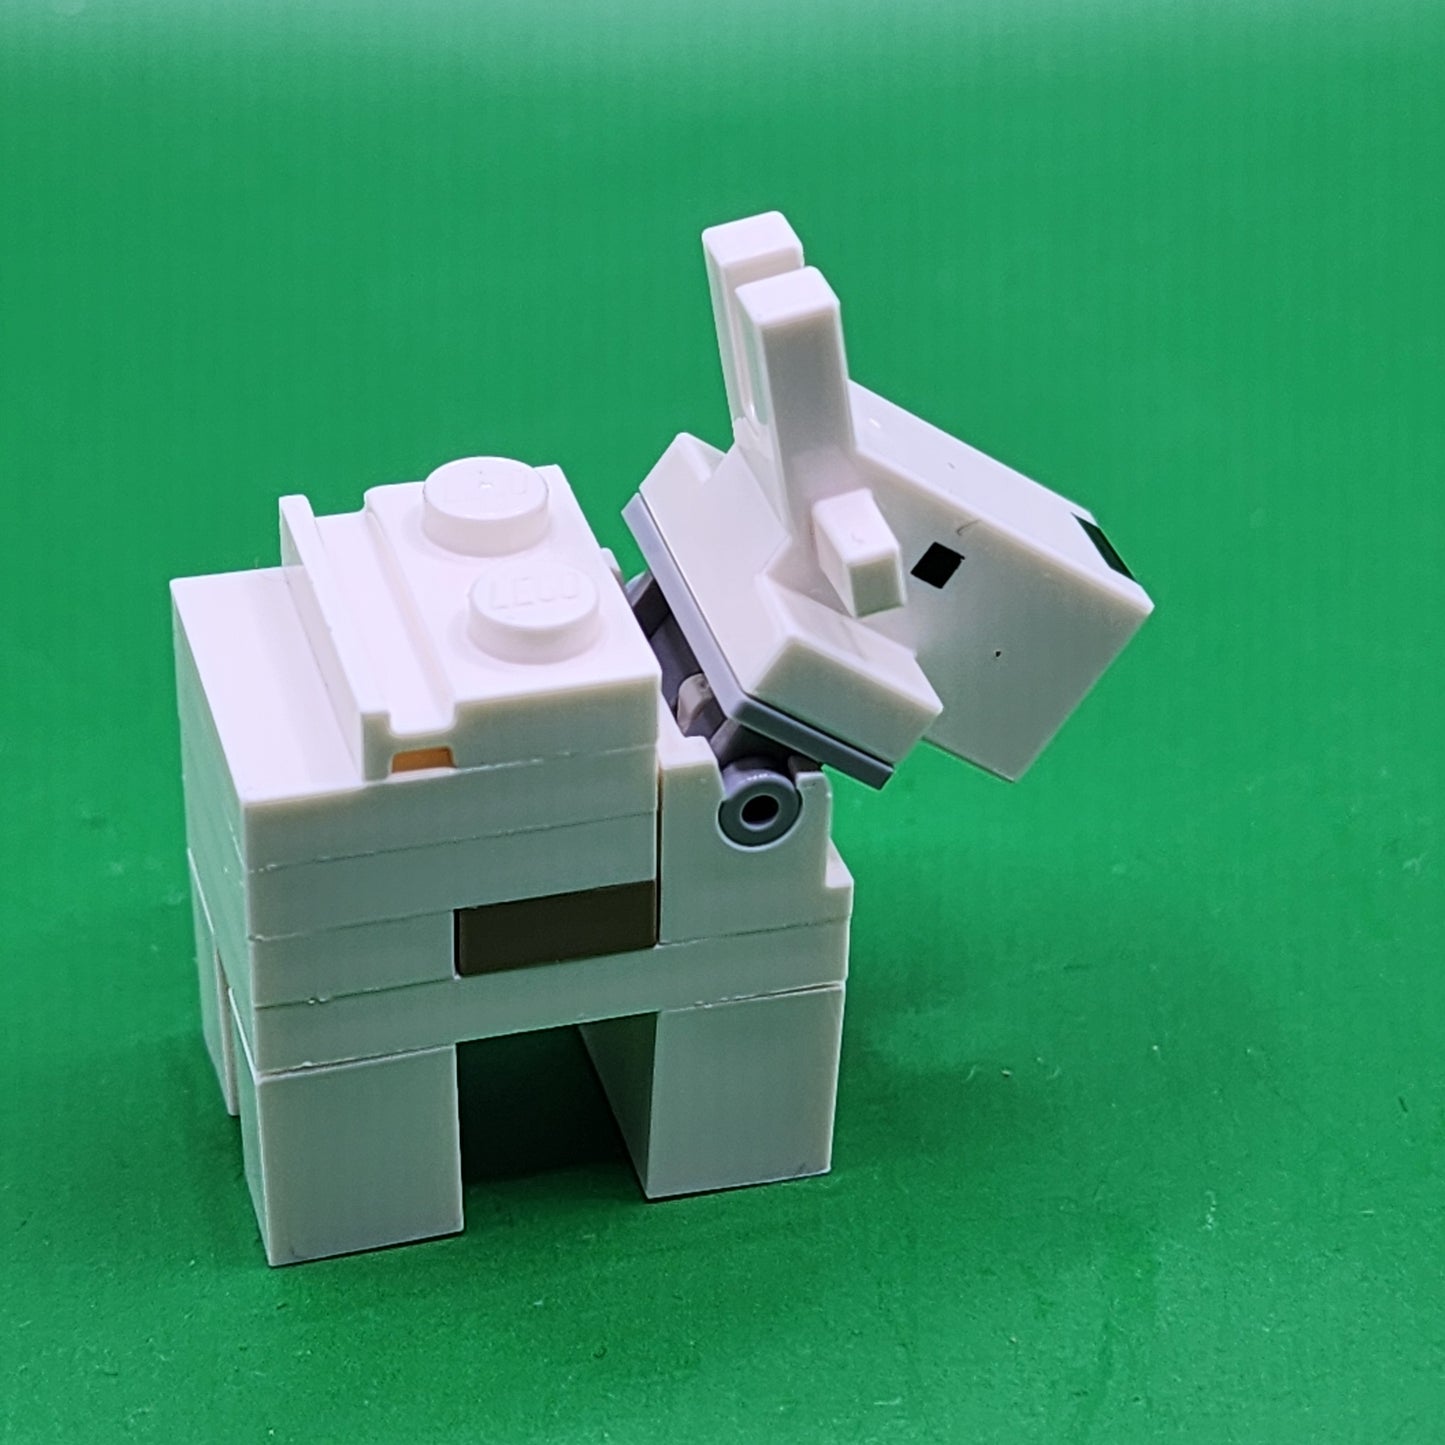 Lego Minecraft Goat Brick Built Minifigure Animal minegoat01